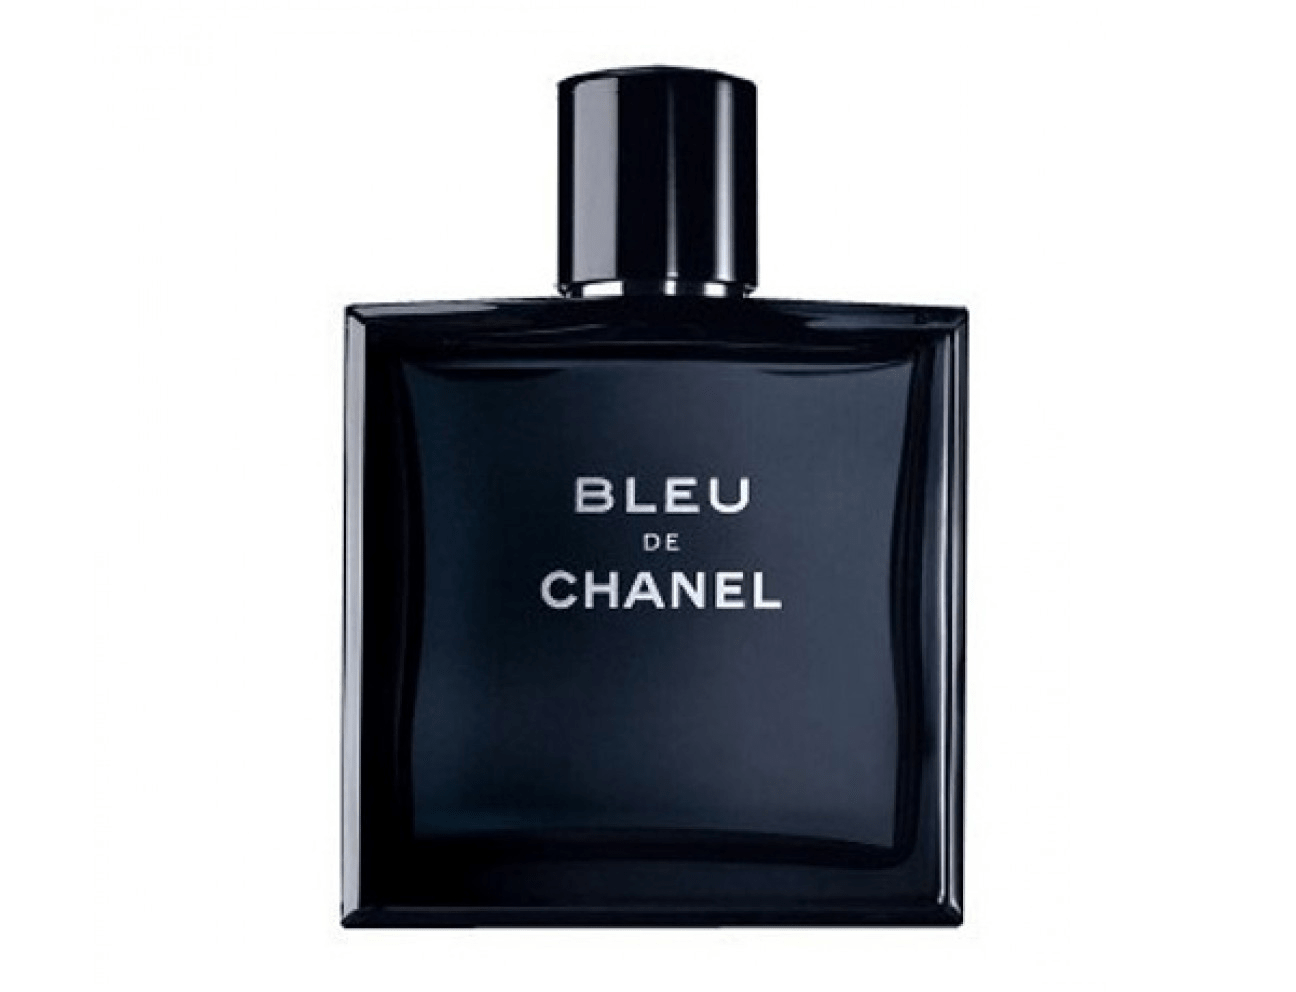 Celes (繧ｻ繝ｬ繧ｹ) Chanel Bleu de Chanel(繧ｷ繝｣繝阪Ν 繝悶Ν繝ｼ 繝峨ぇ 繧ｷ繝｣繝阪Ν)